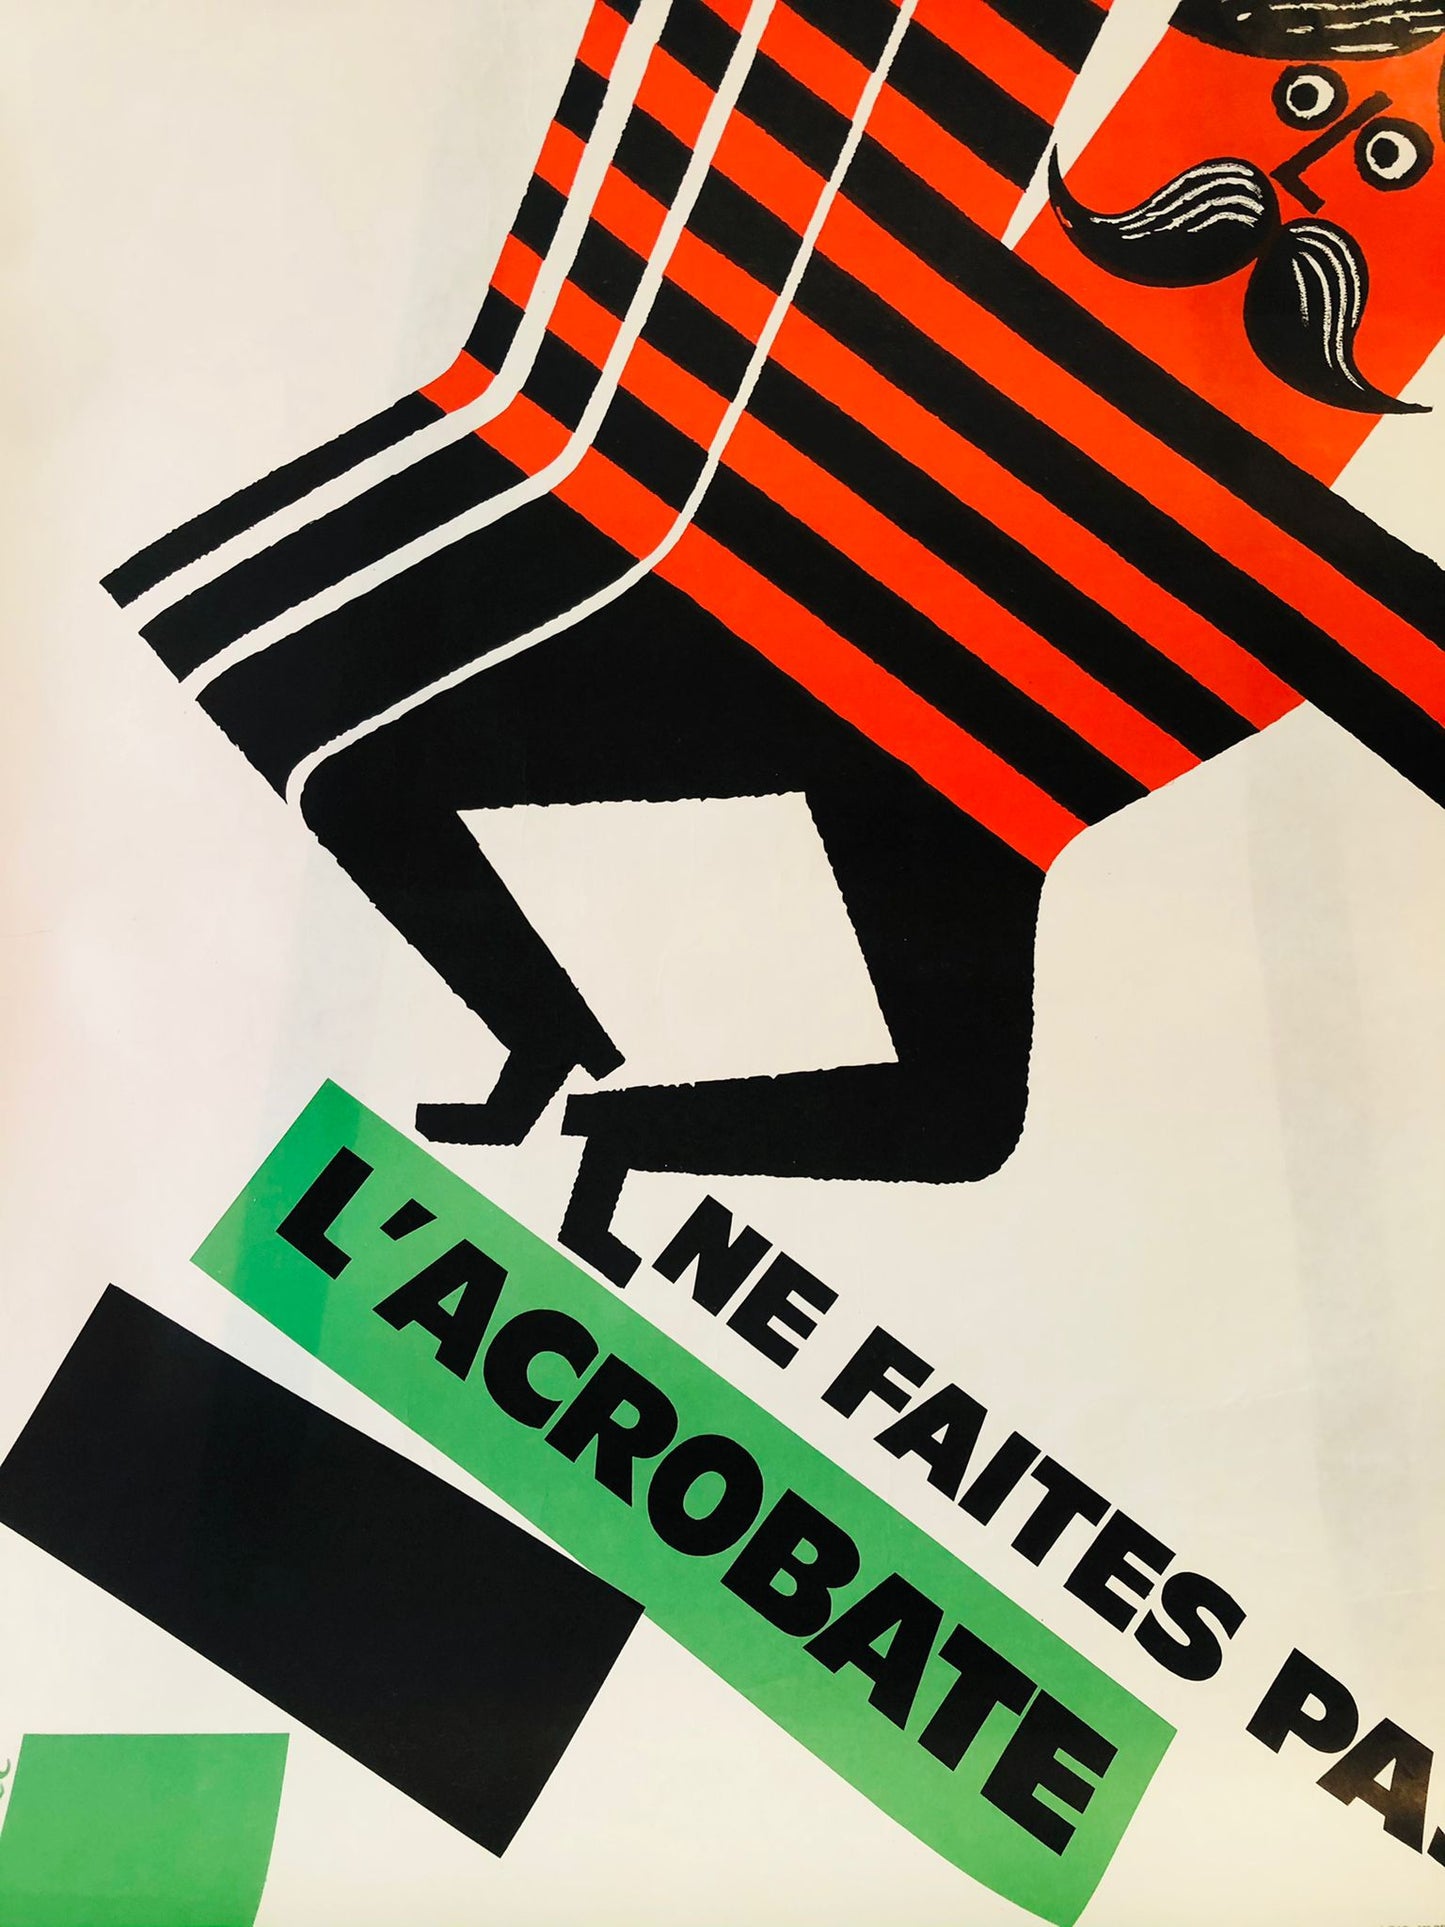 Ne Faites Pas L'Acrobate by Bernard Chadebec